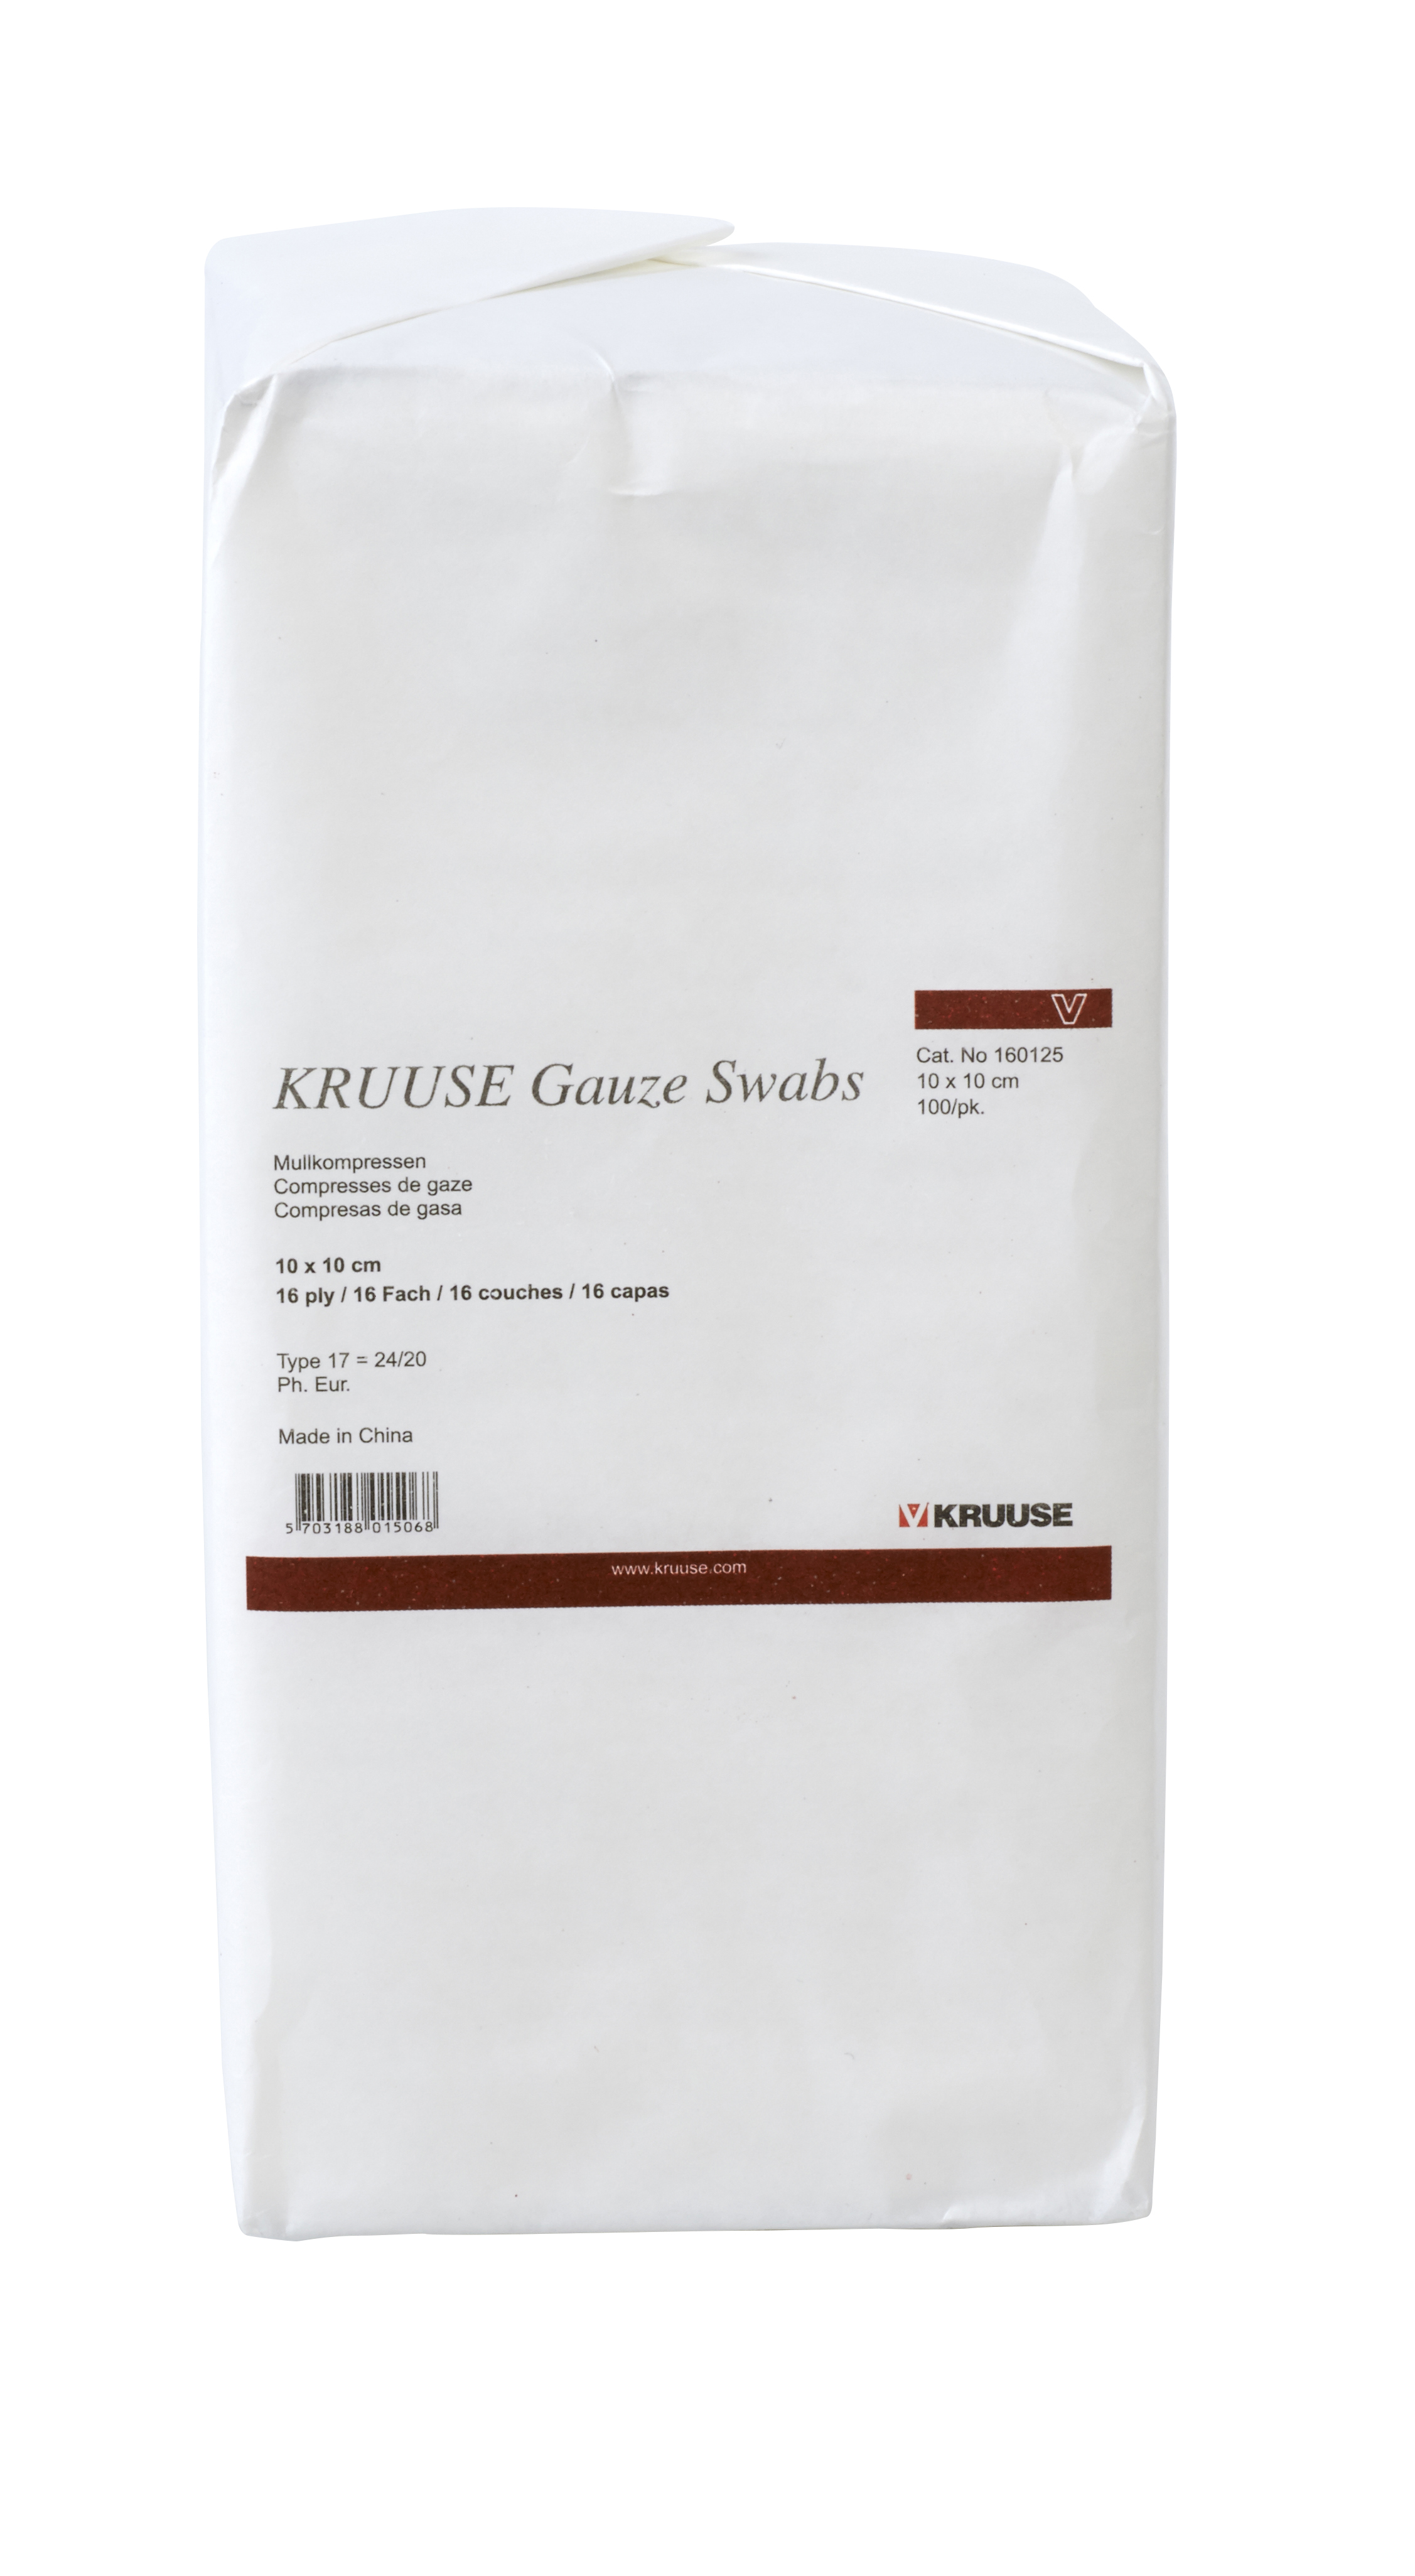 KRUUSE Non-sterile, Gauze Swabs, 10 x 10 cm, 16 ply, 17 threads, 100/pk